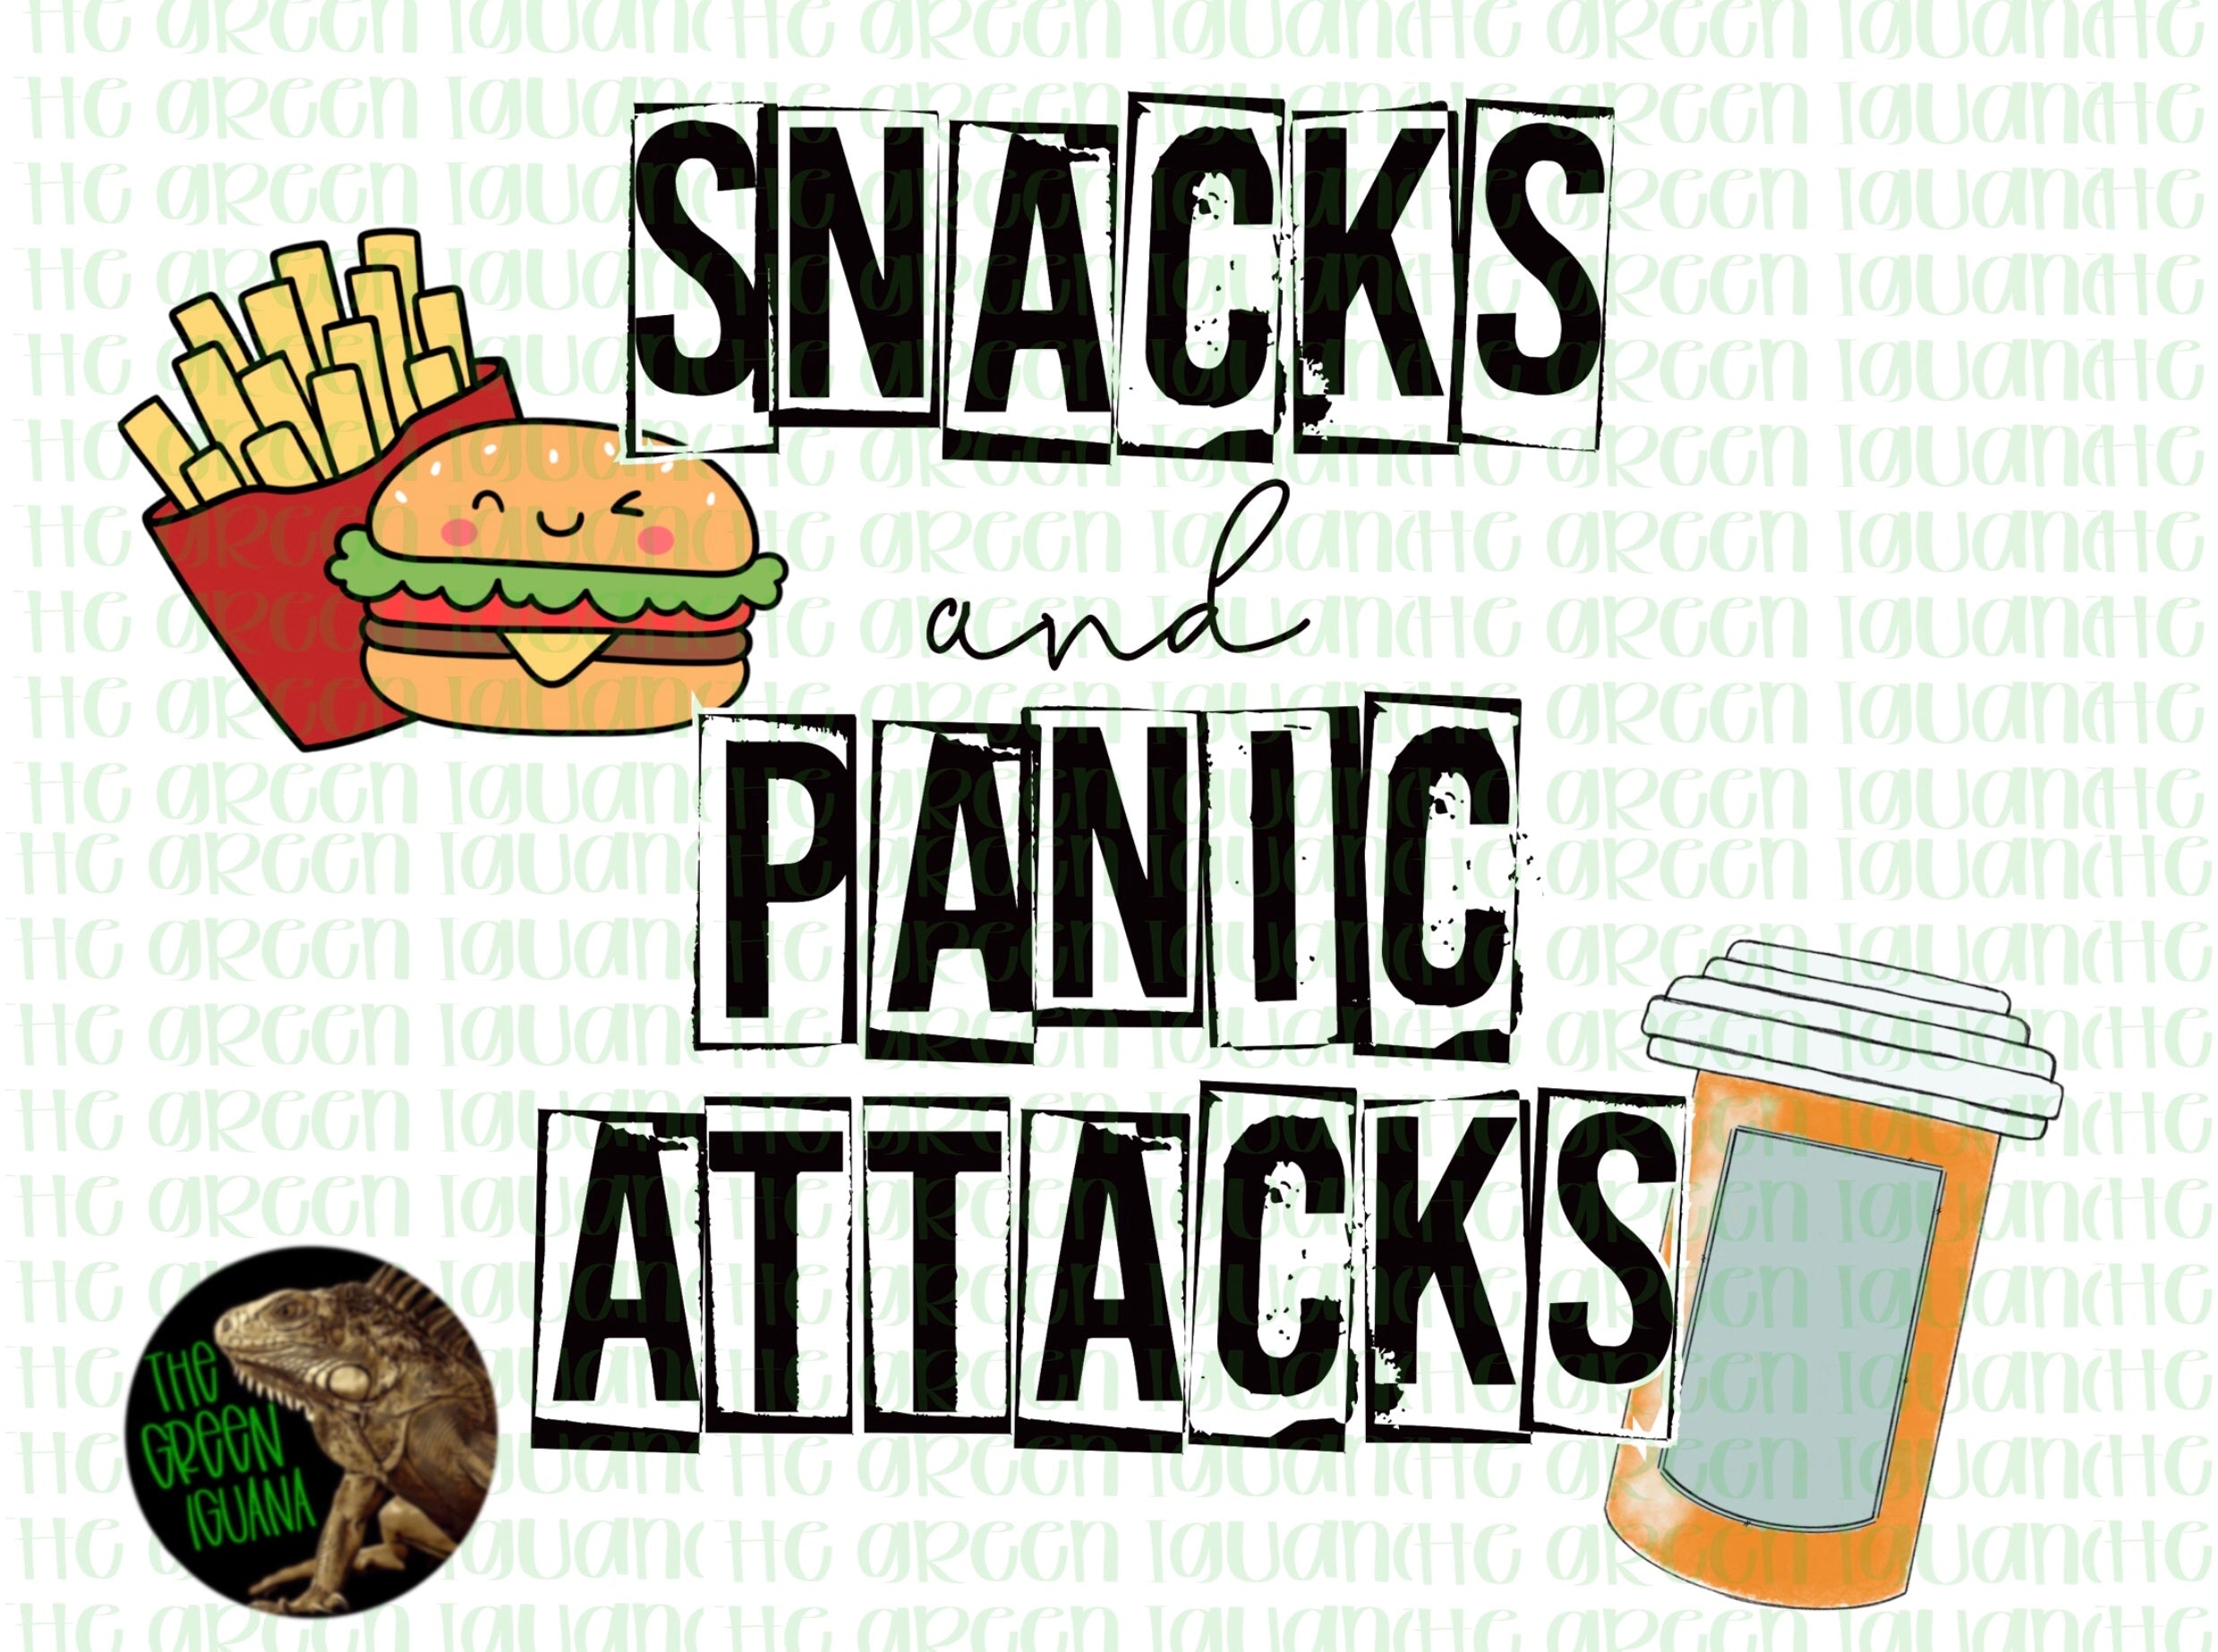 Snacks and panic attacks - DIGITAL